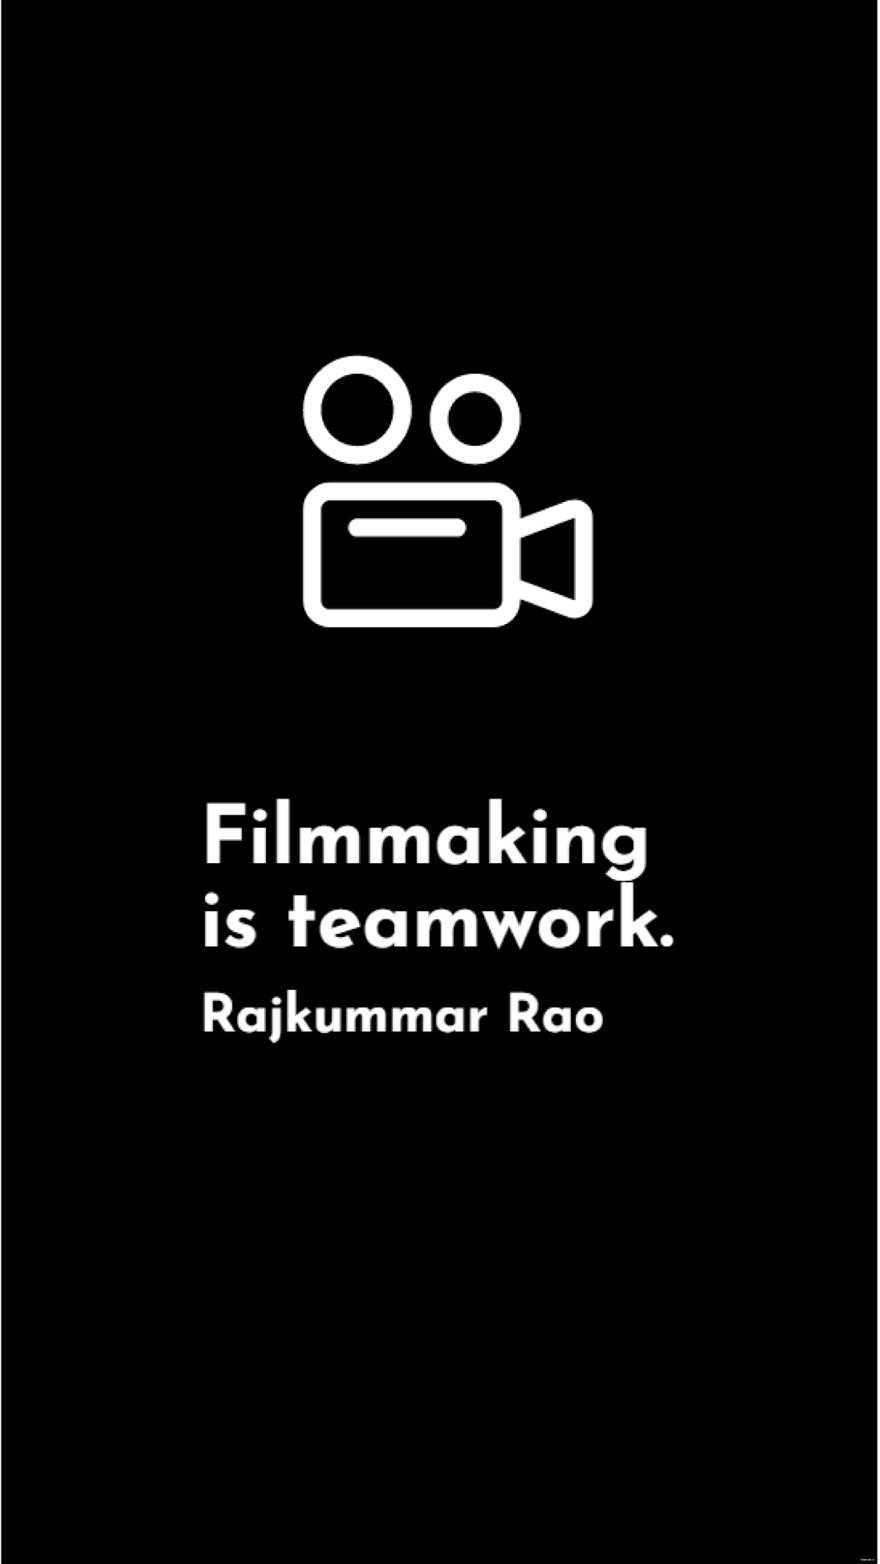 Rajkummar Rao - Filmmaking is teamwork. in JPG